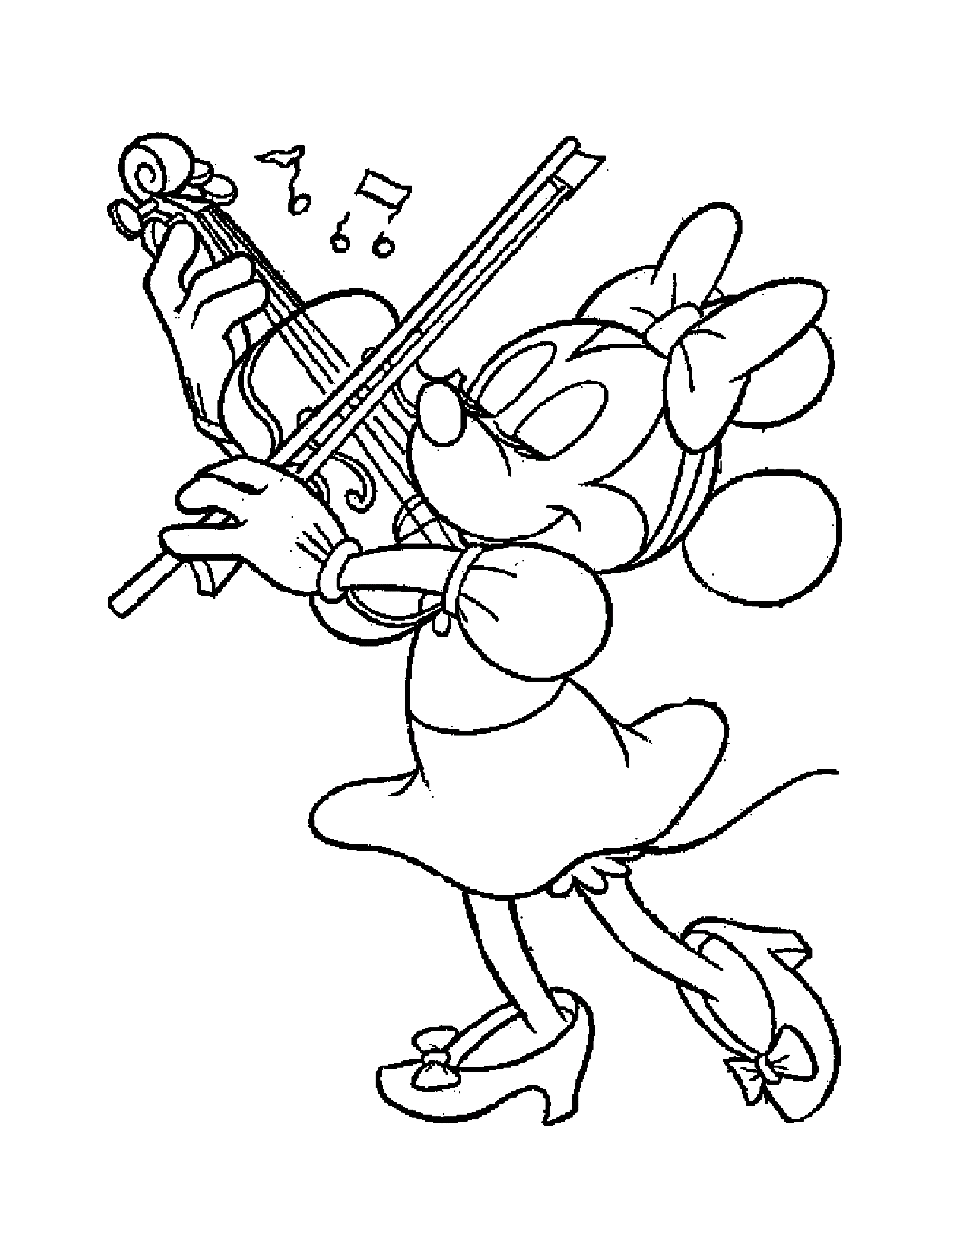 Minnie plays the violin